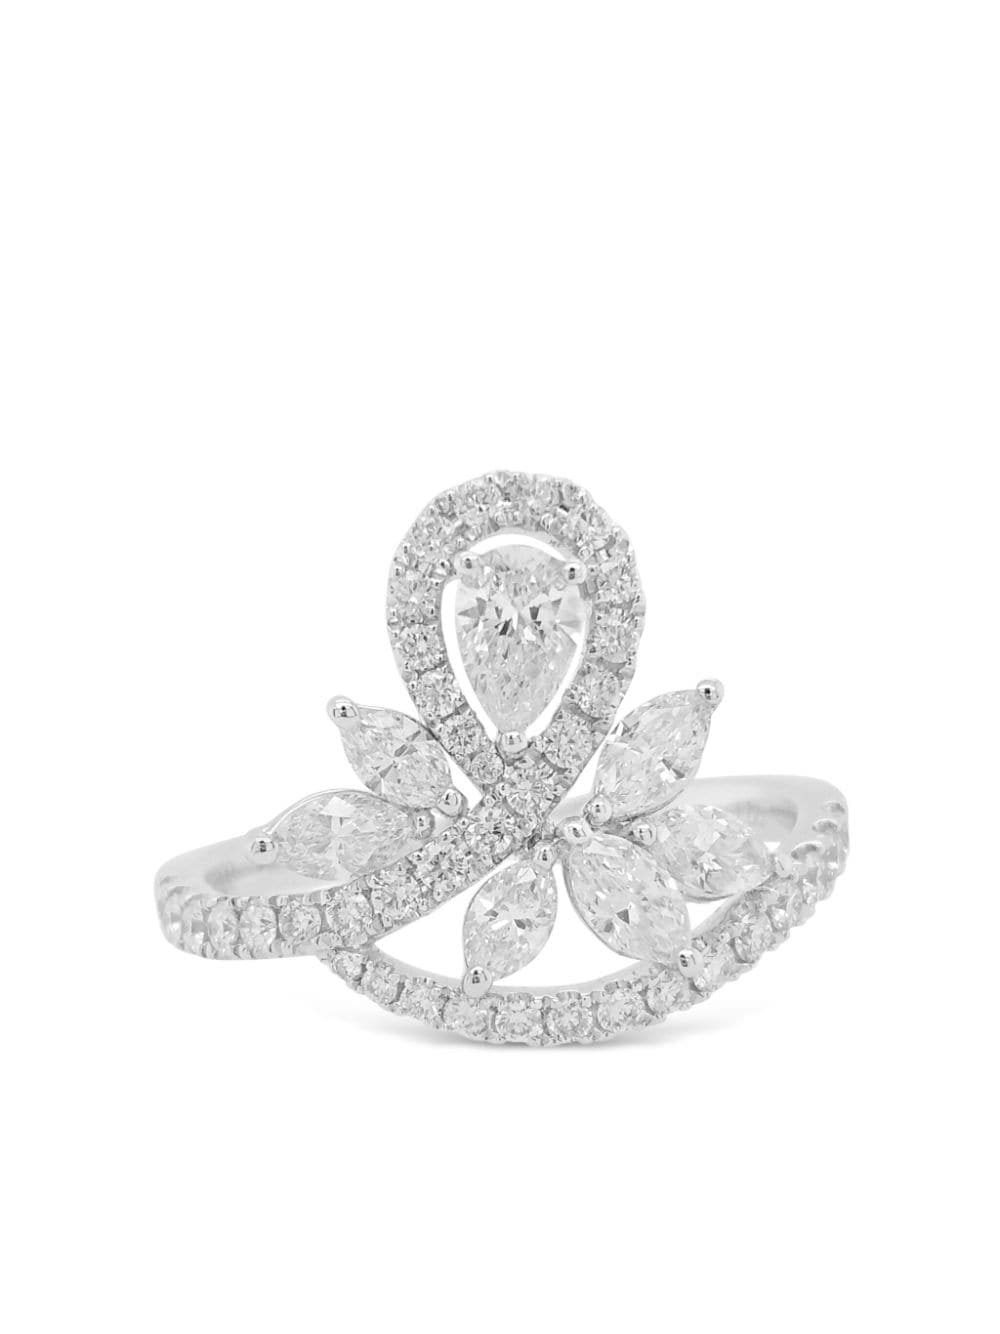 HYT Jewelry platinum and diamond ring - Silver von HYT Jewelry